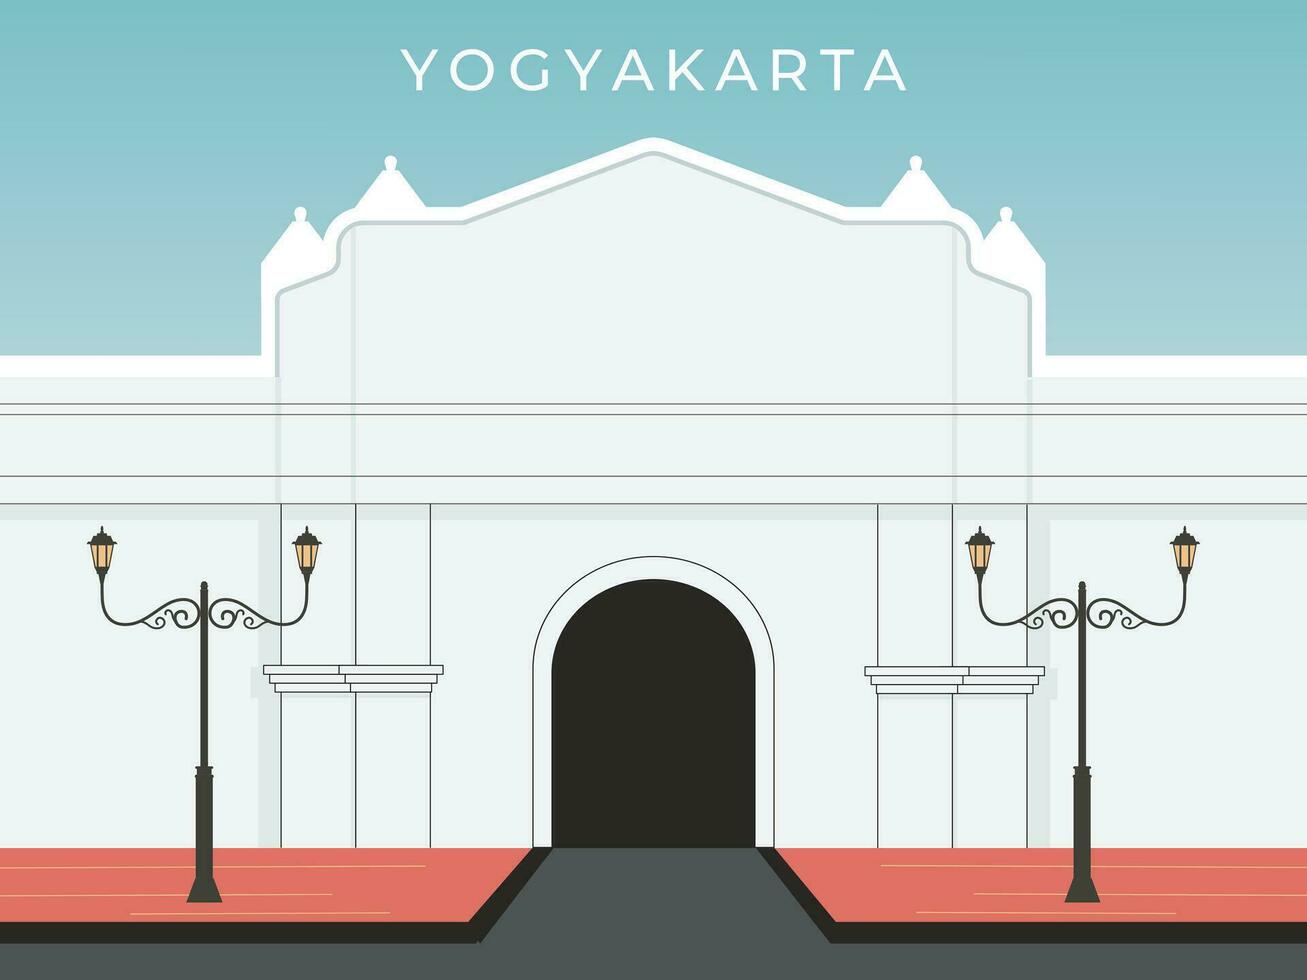 Yogyakarta Fort Hintergrund vektor